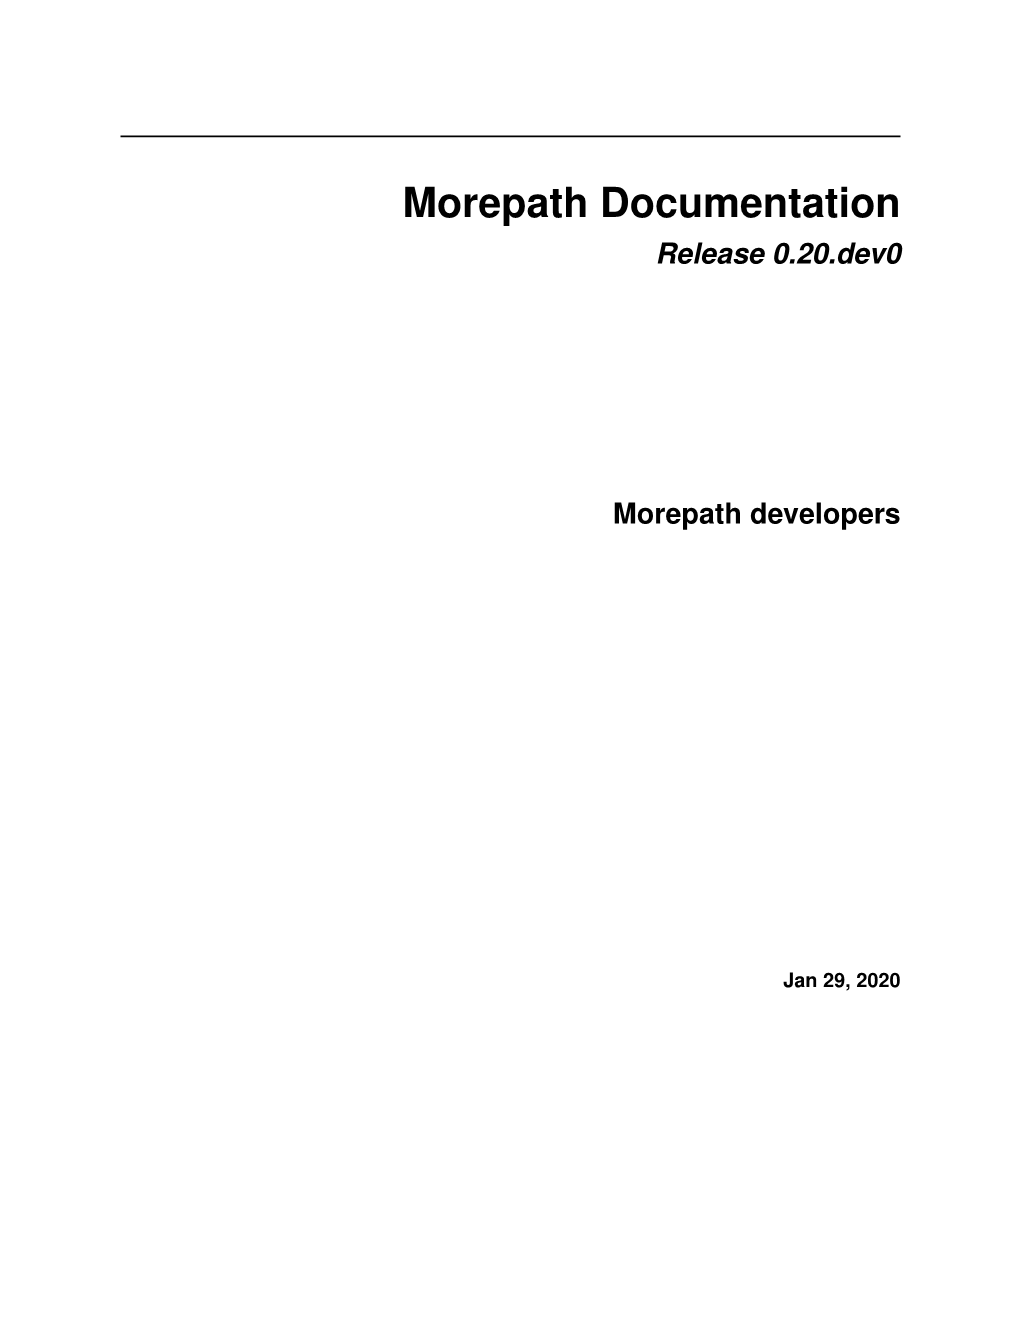 Morepath Documentation Release 0.20.Dev0